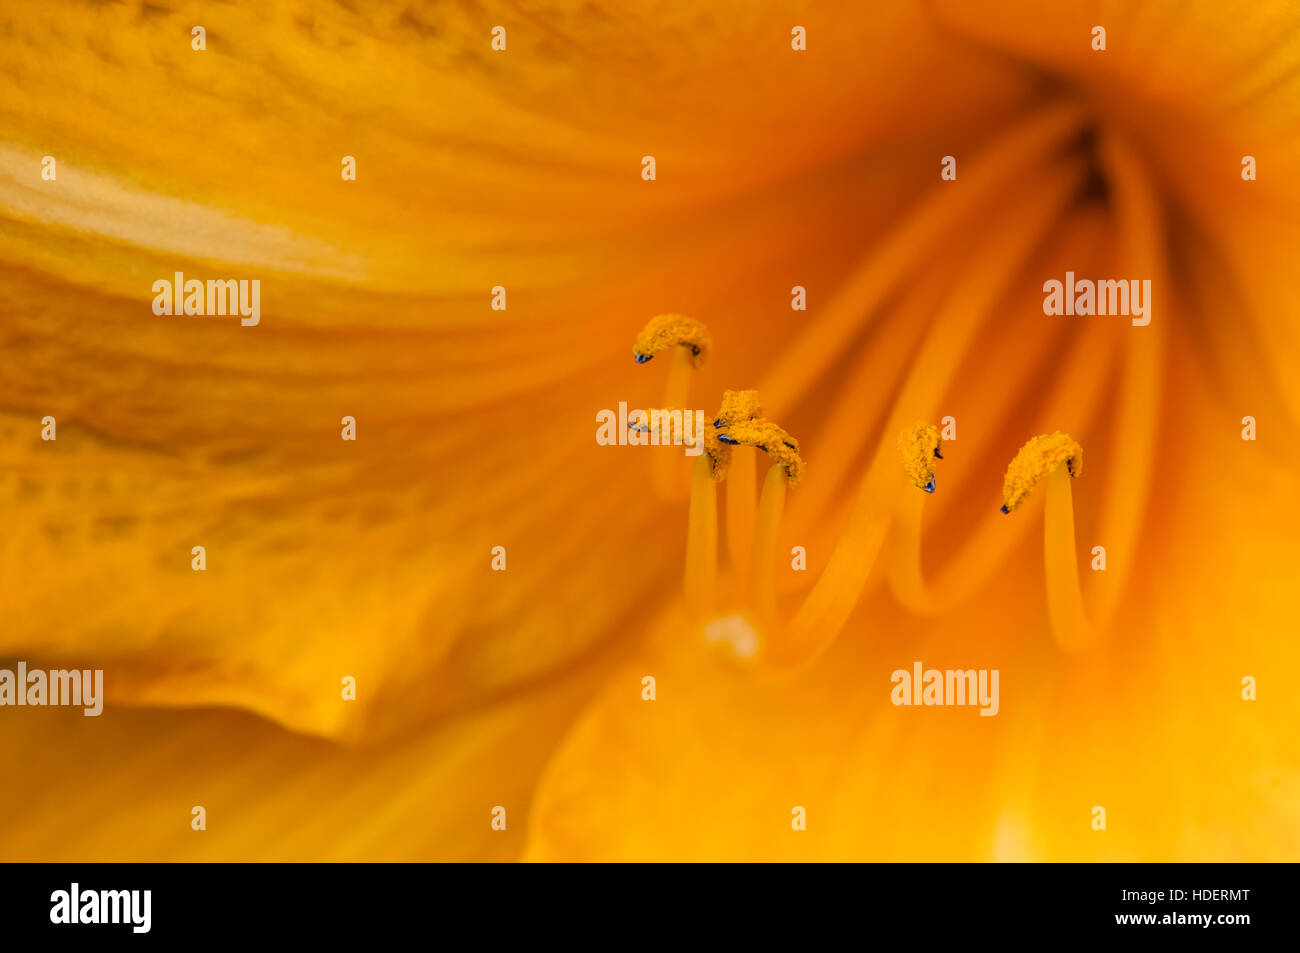 Marco shot of a orange lily stamen stigma and pollen pistils in bloom ...